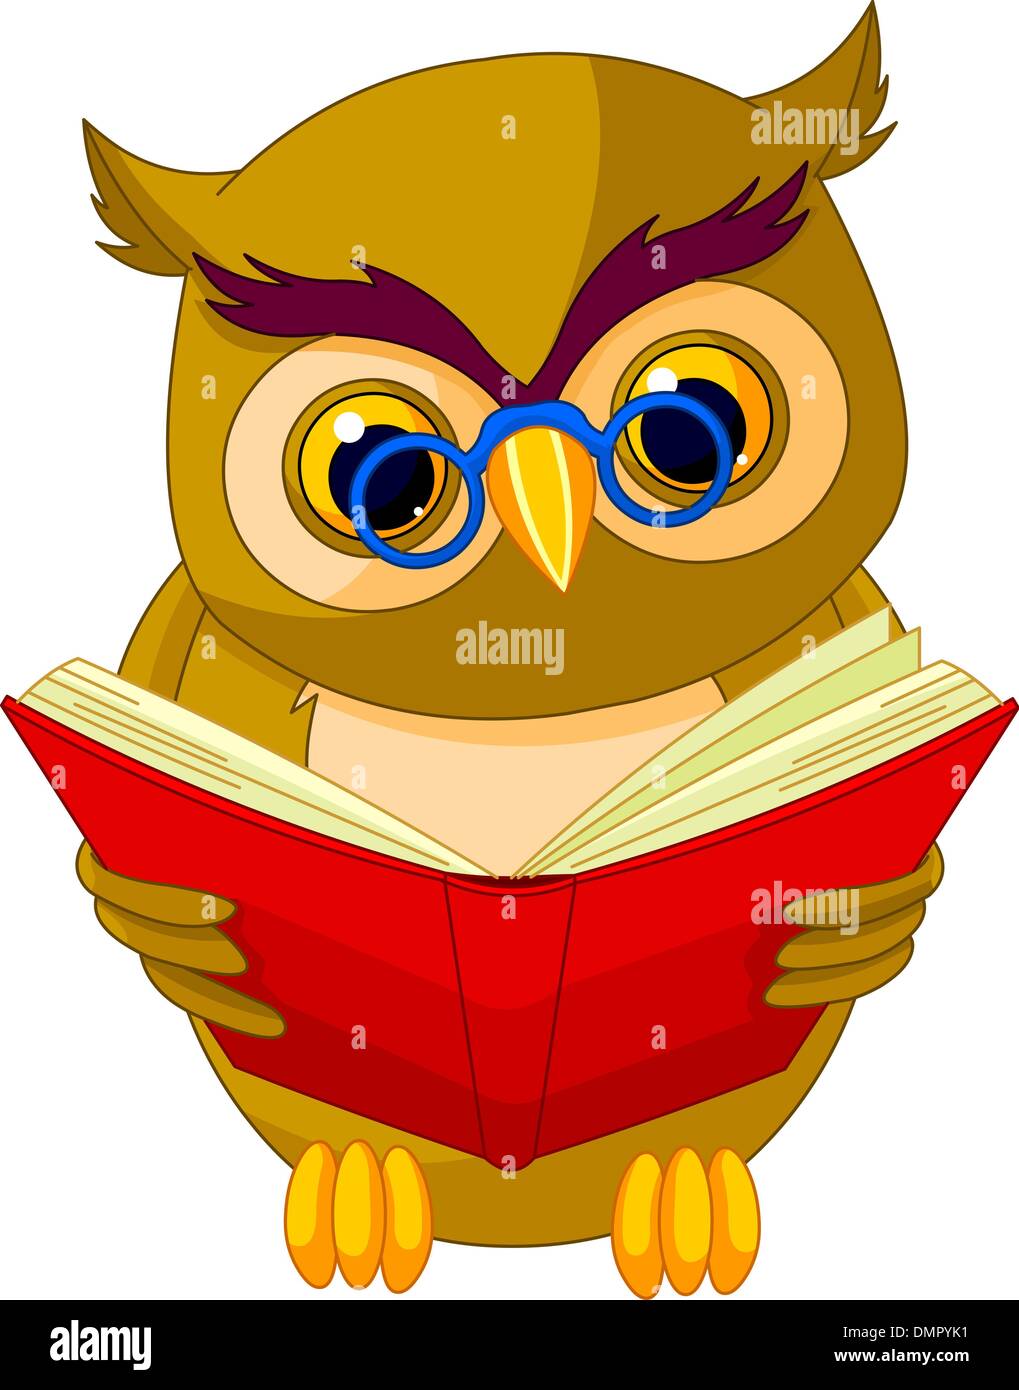 Wise Owl Cartoon Stock Vector